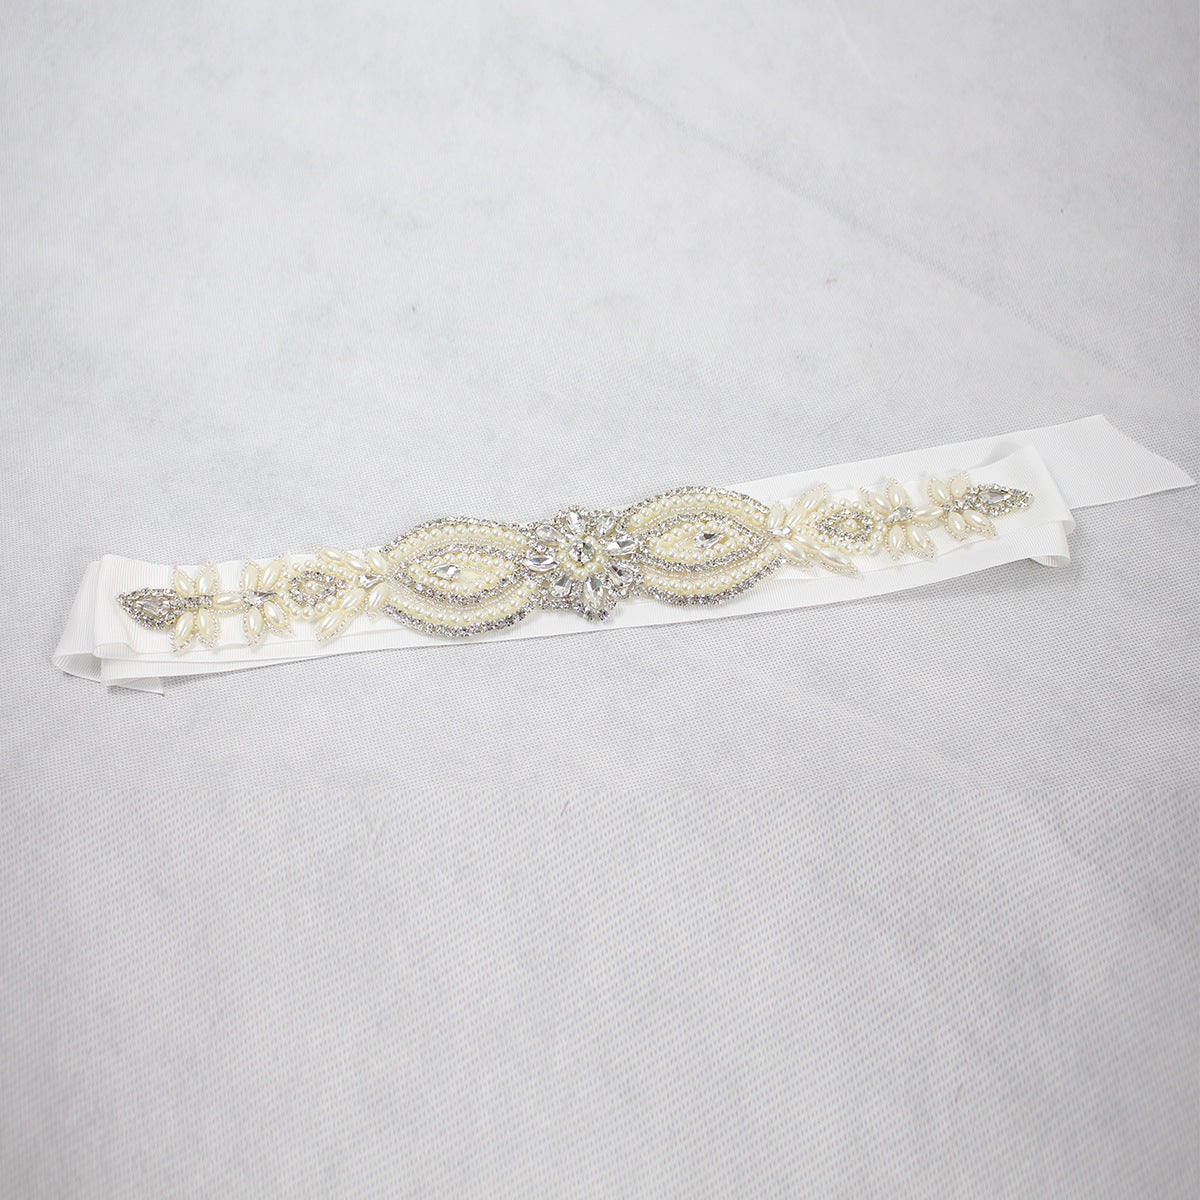 Hand-stitched bride vintage belt